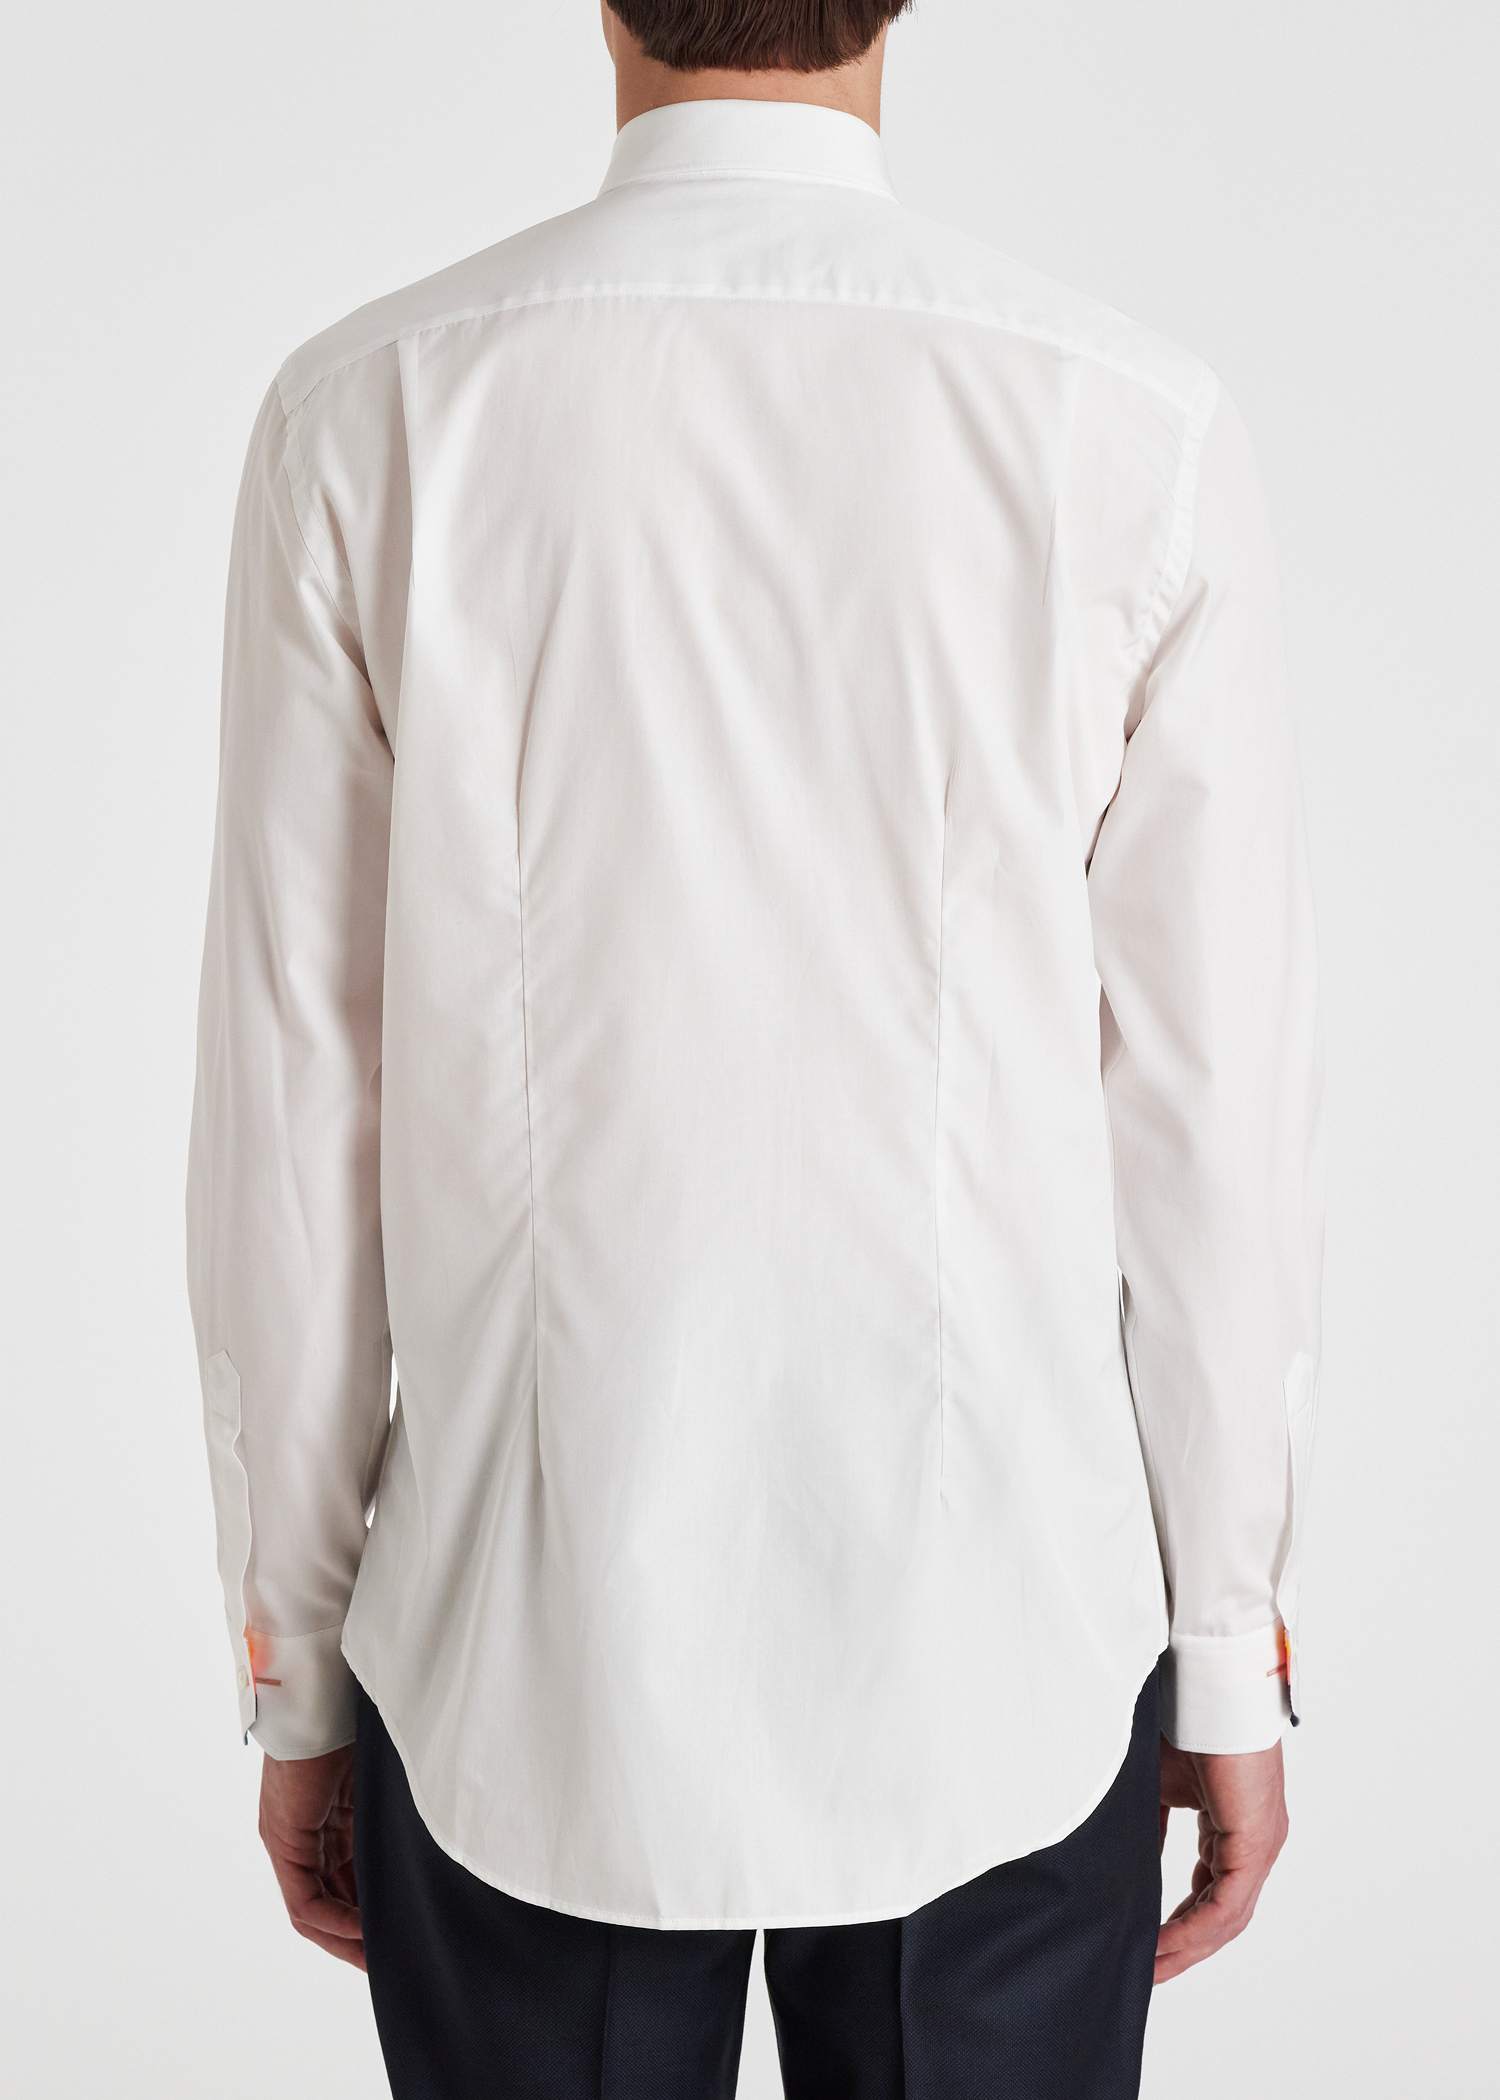 Designer Formal Shirts for Men | Paul Smith